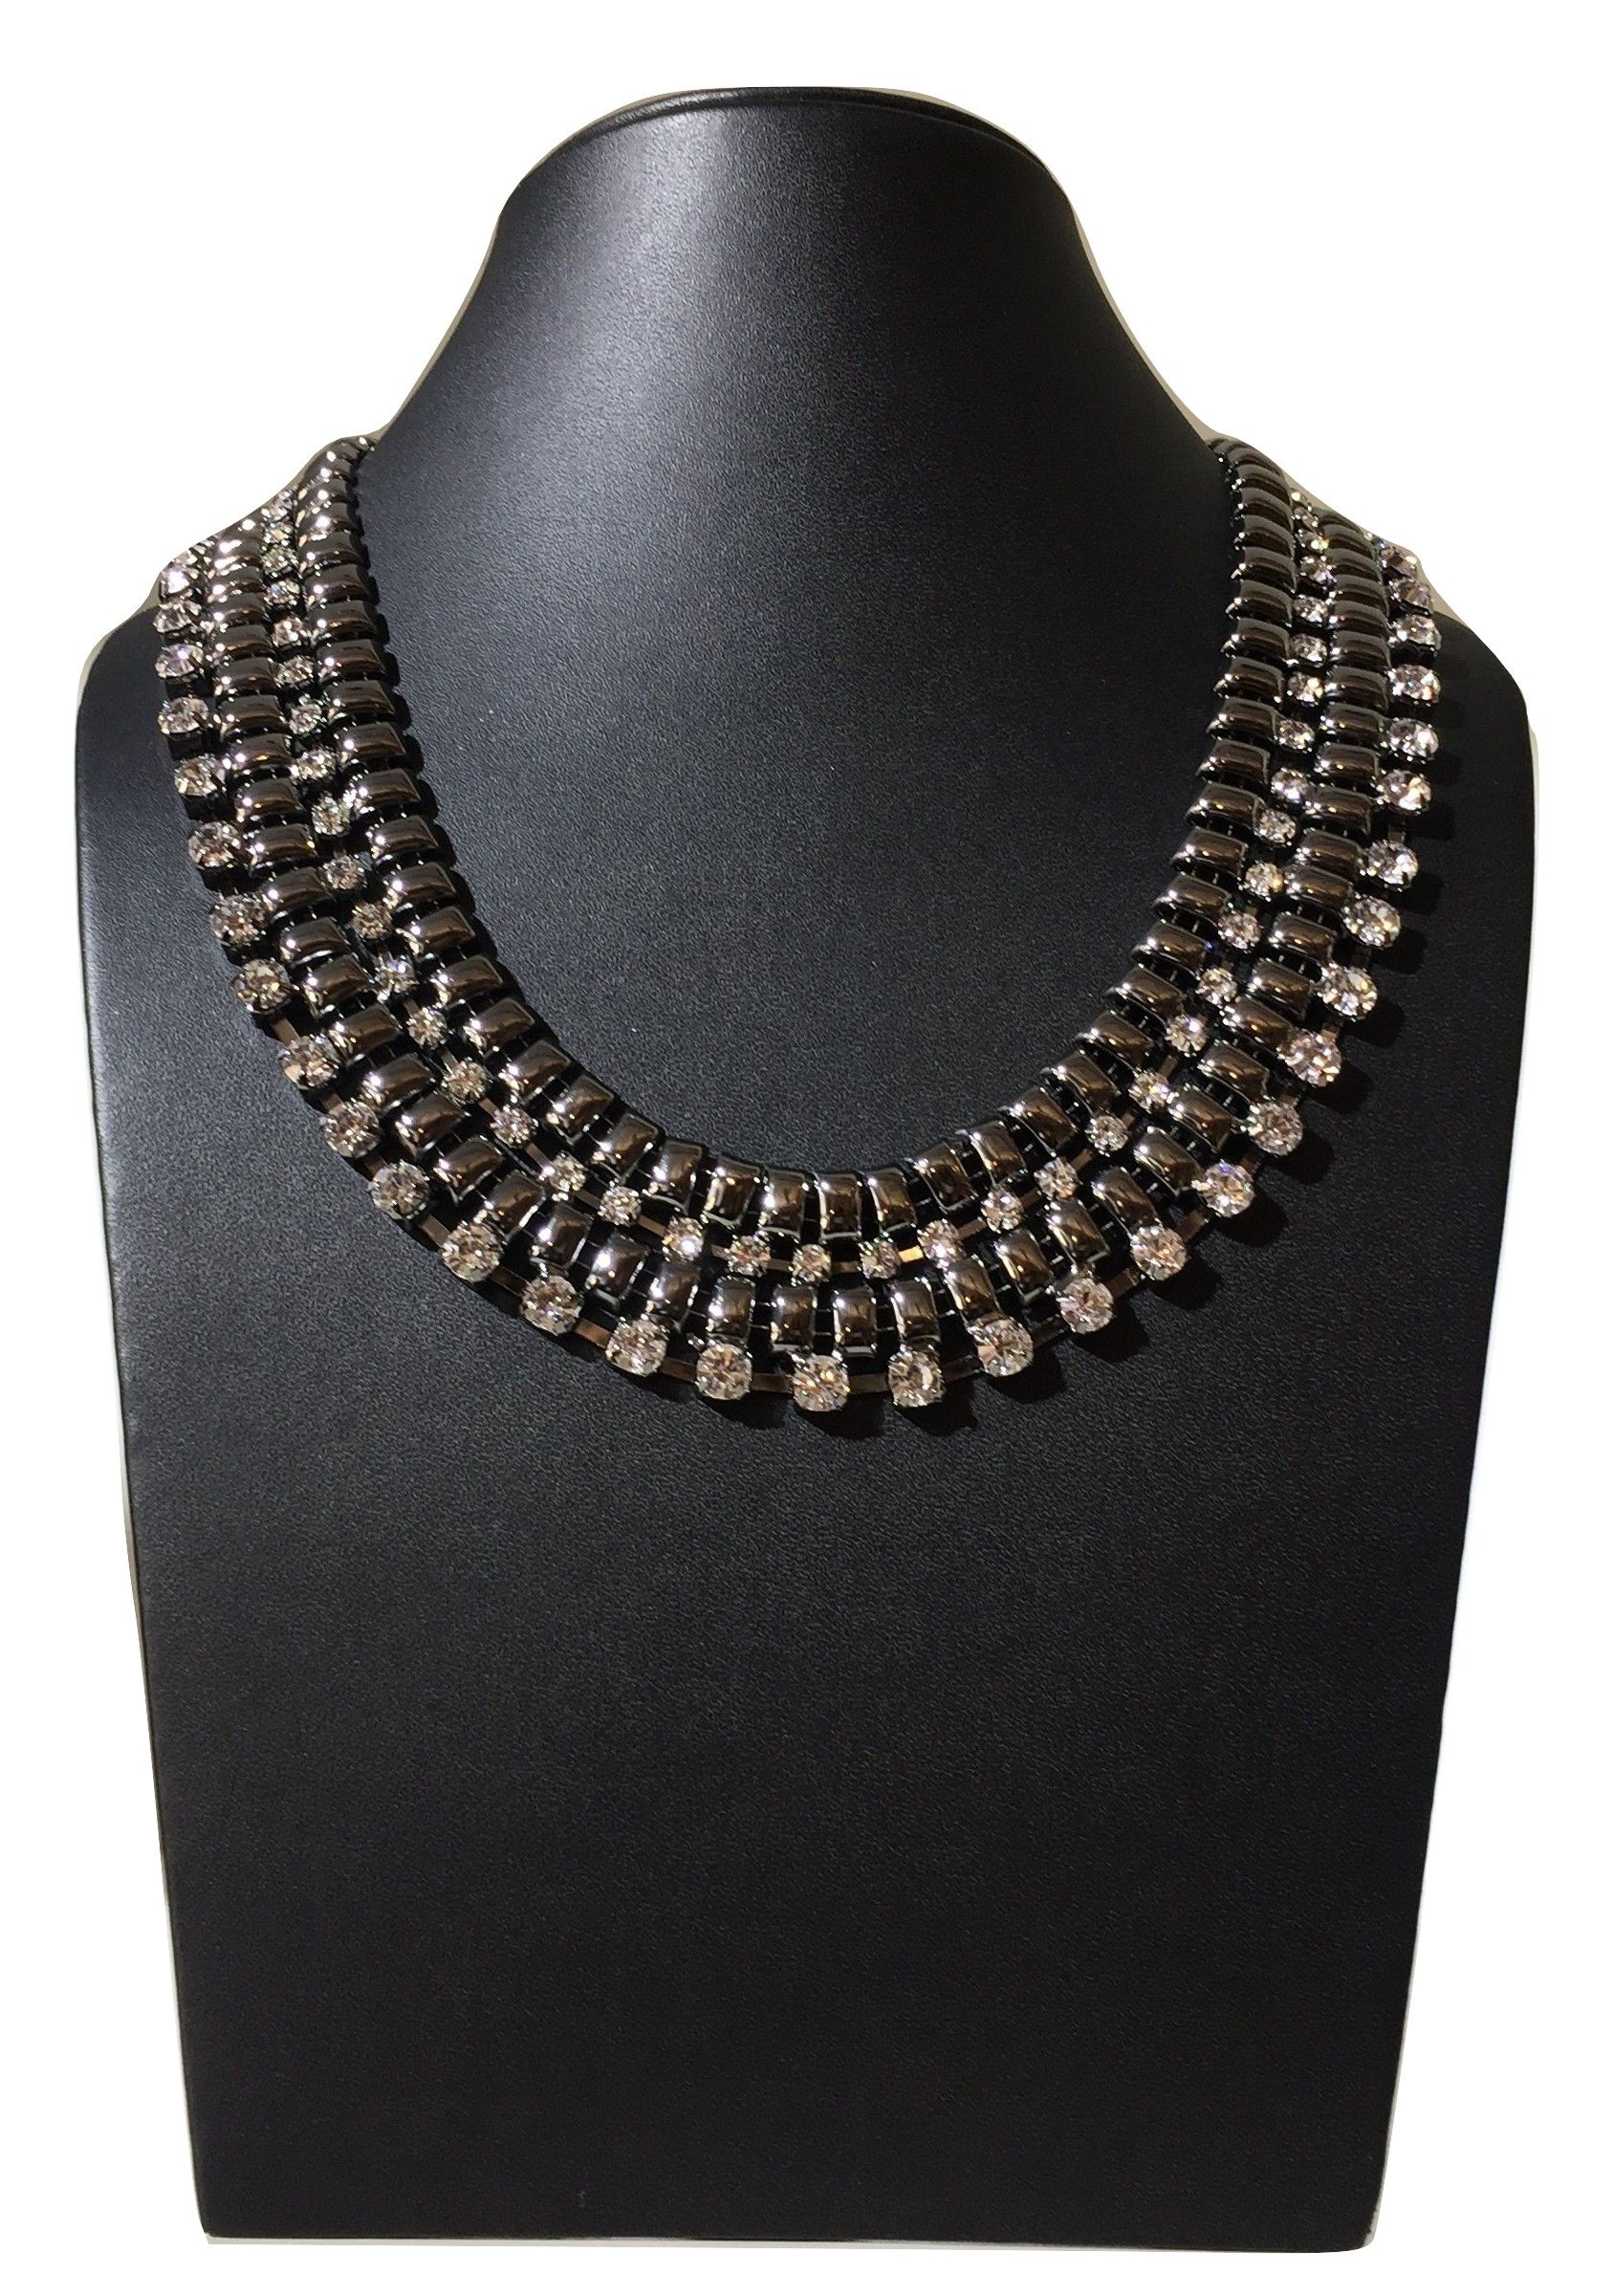 Antique Vintage Fashion Necklace Jewelry Bib Chain Pendant Silver Women ...